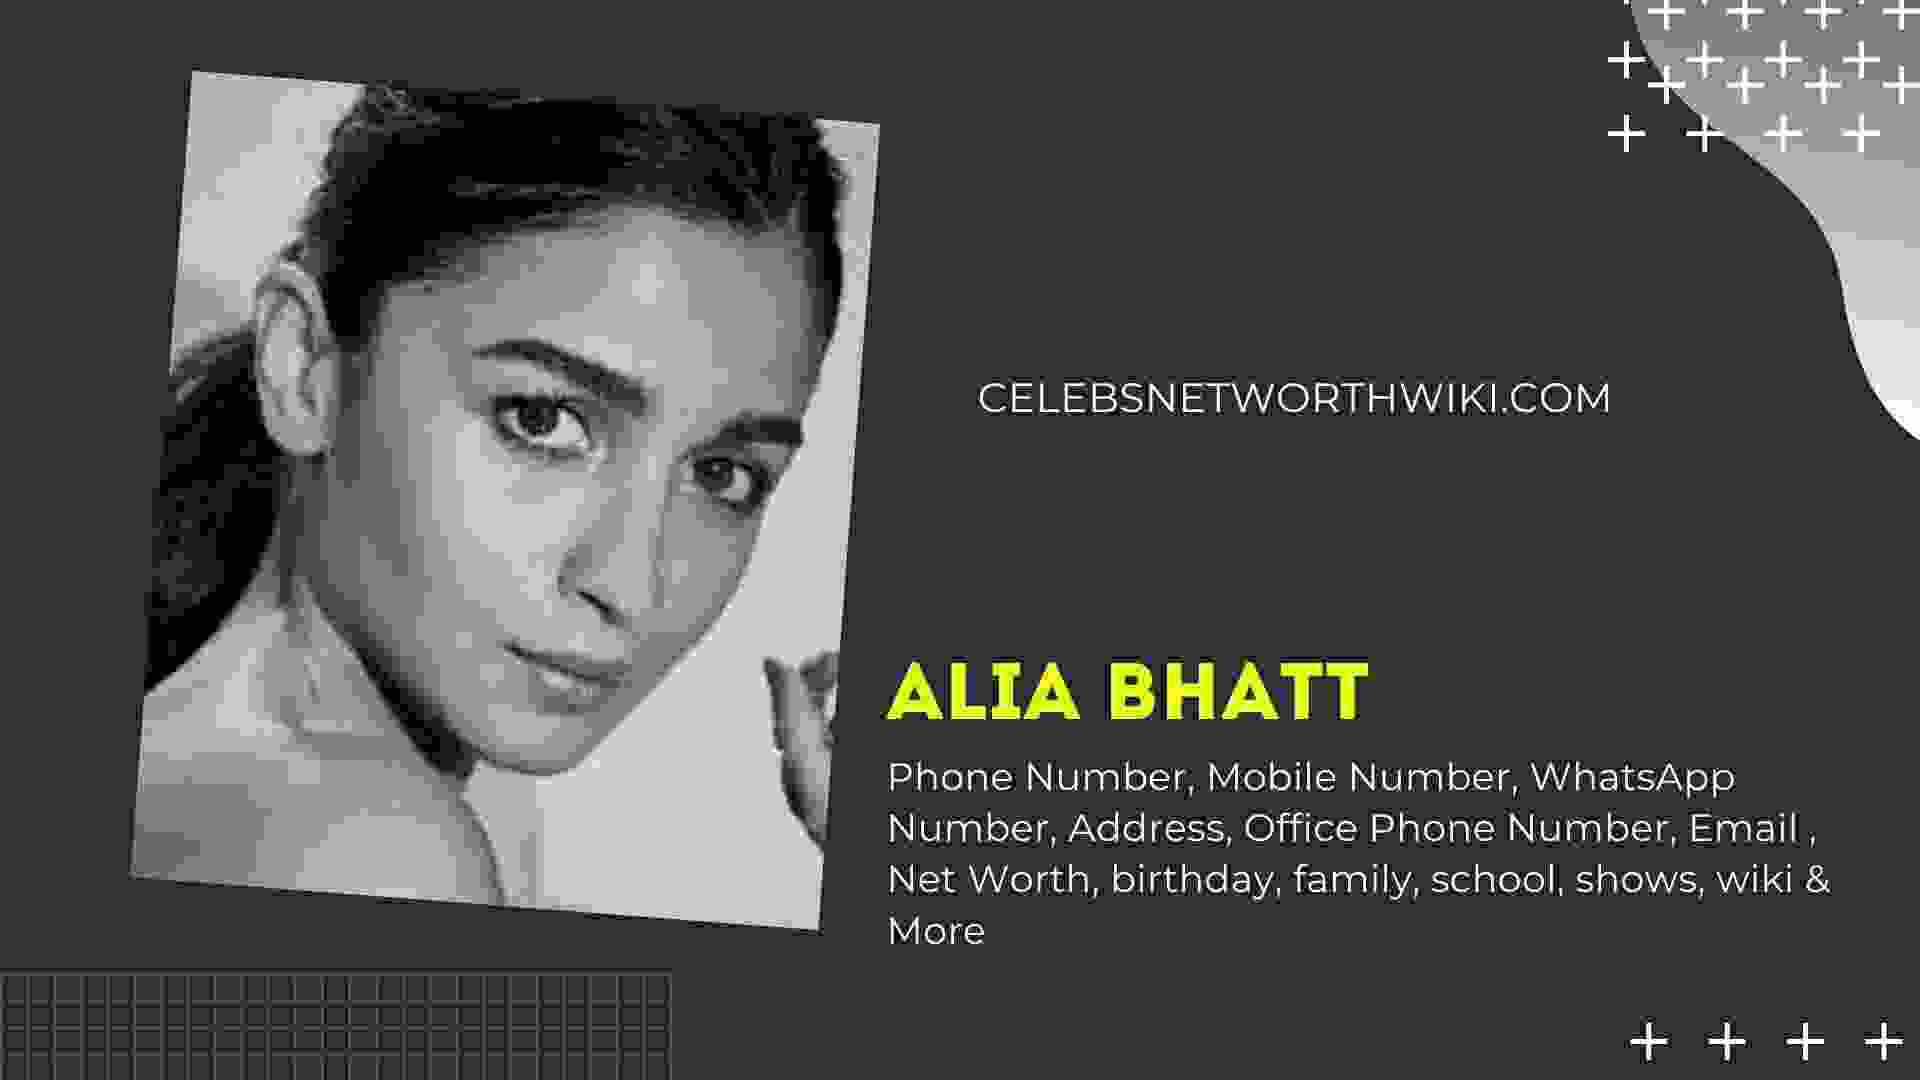 Alia Bhatt Phone Number Whatsapp Number Contact Number Office Phone Number Celebs Networth Wiki The latest tweets from alia bhatt (@aliaa08). alia bhatt phone number whatsapp